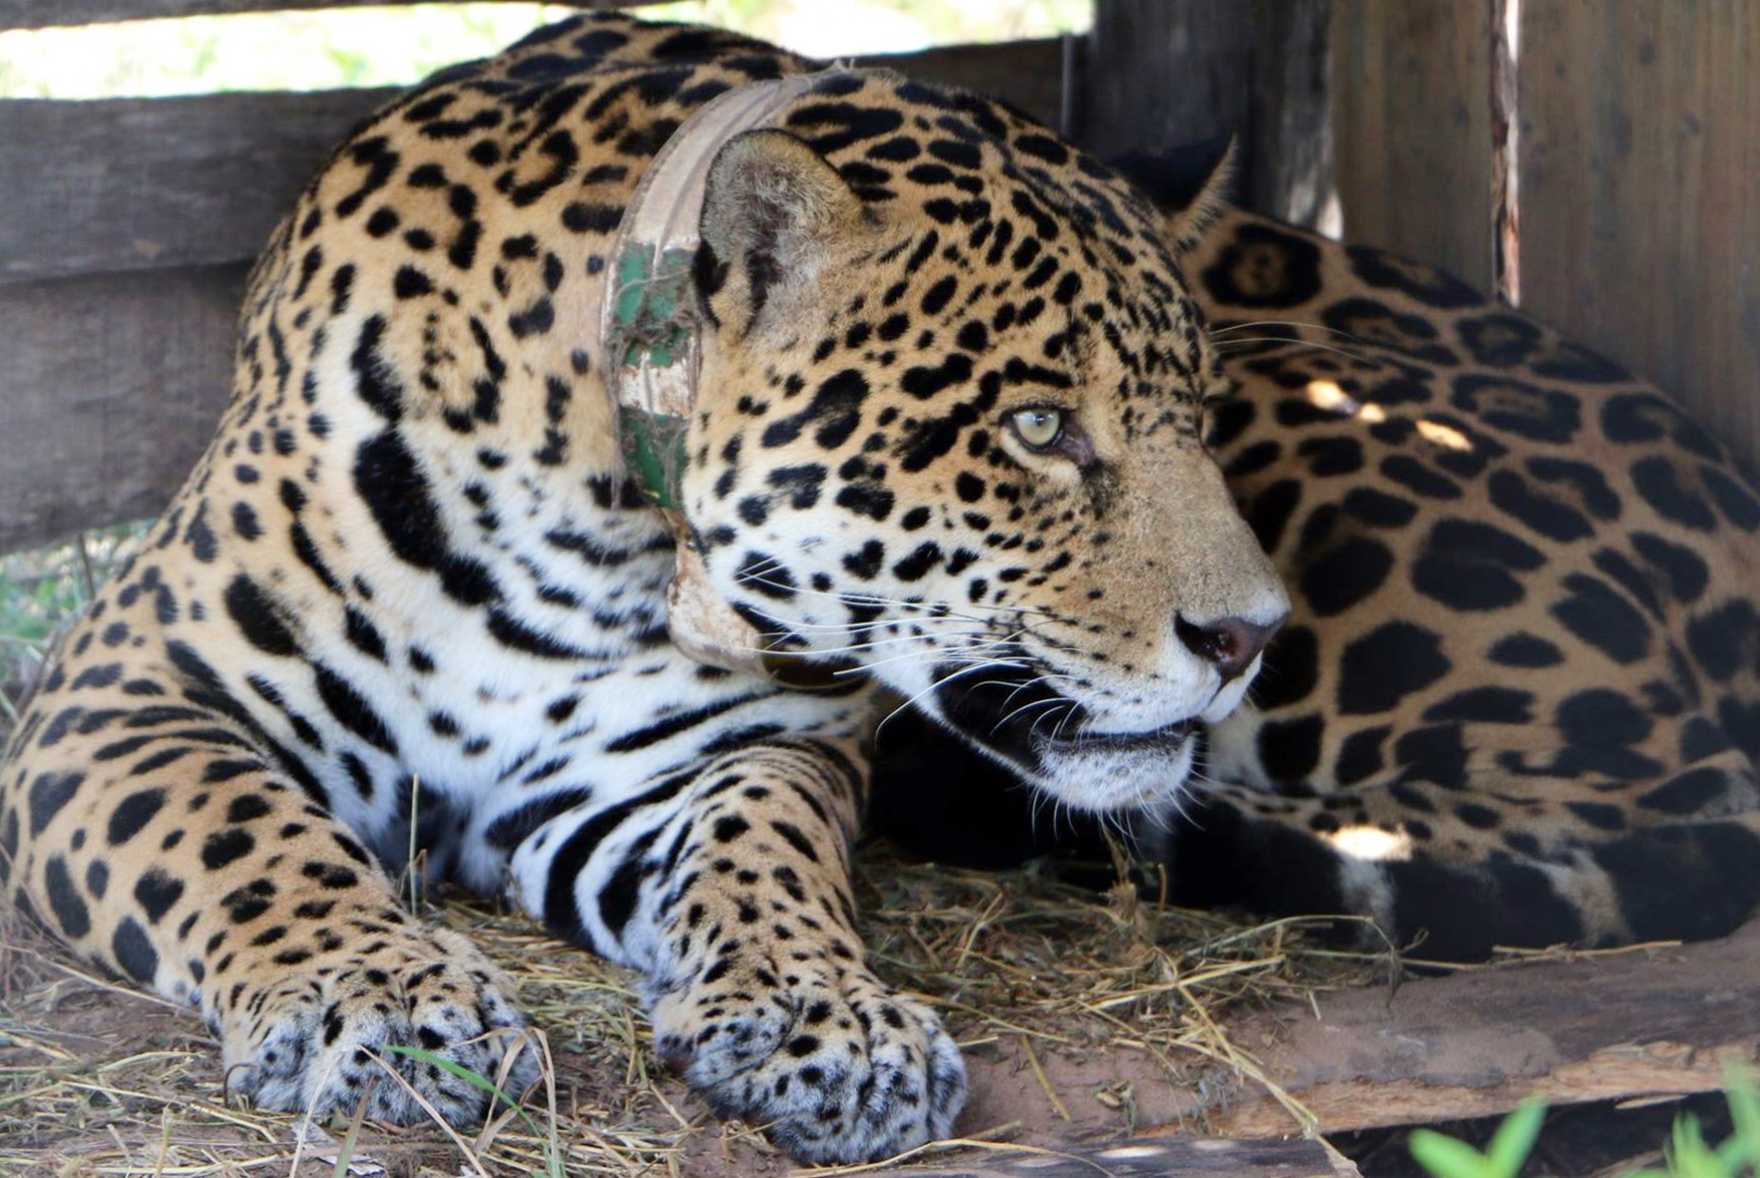 El jaguar “Chiqui” regresó a Paraguay tras el éxito logrado con el proyecto Yaguareté